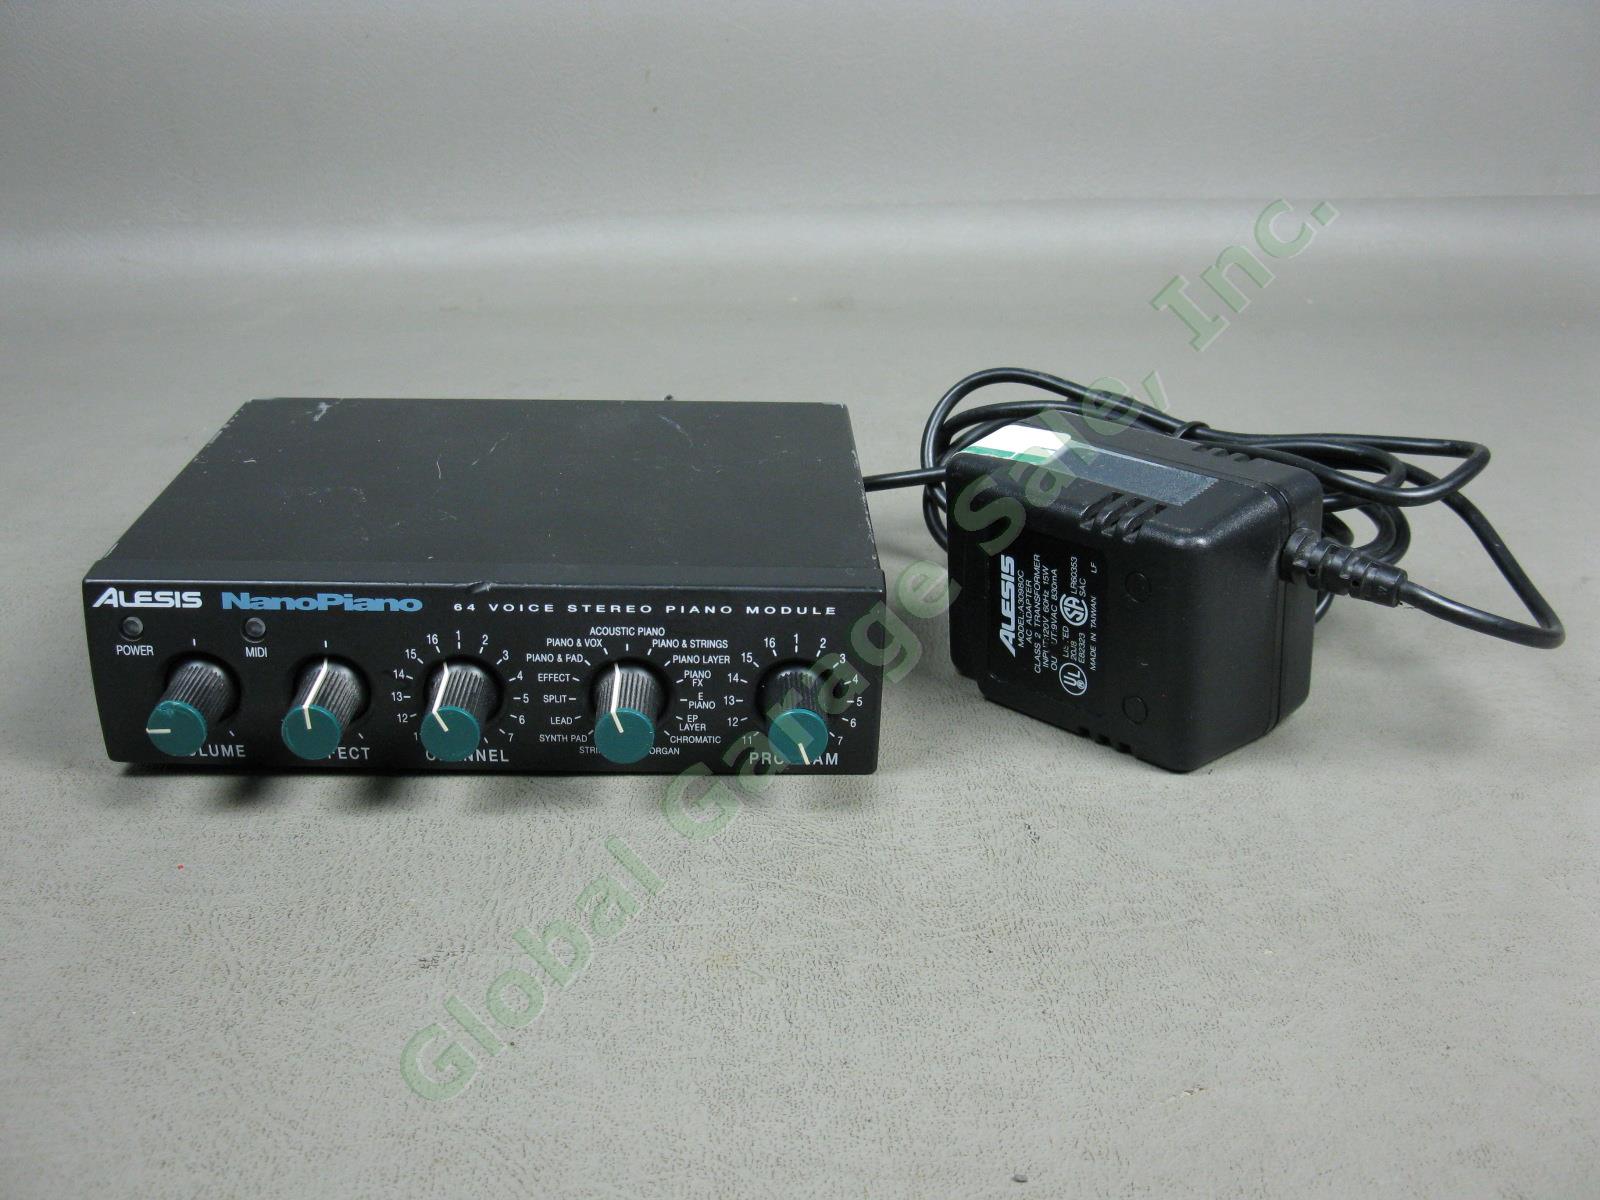 Alesis Nano Piano 64 Voice Stereo MIDI QS Keyboard Synth Module + AC Adapter Lot